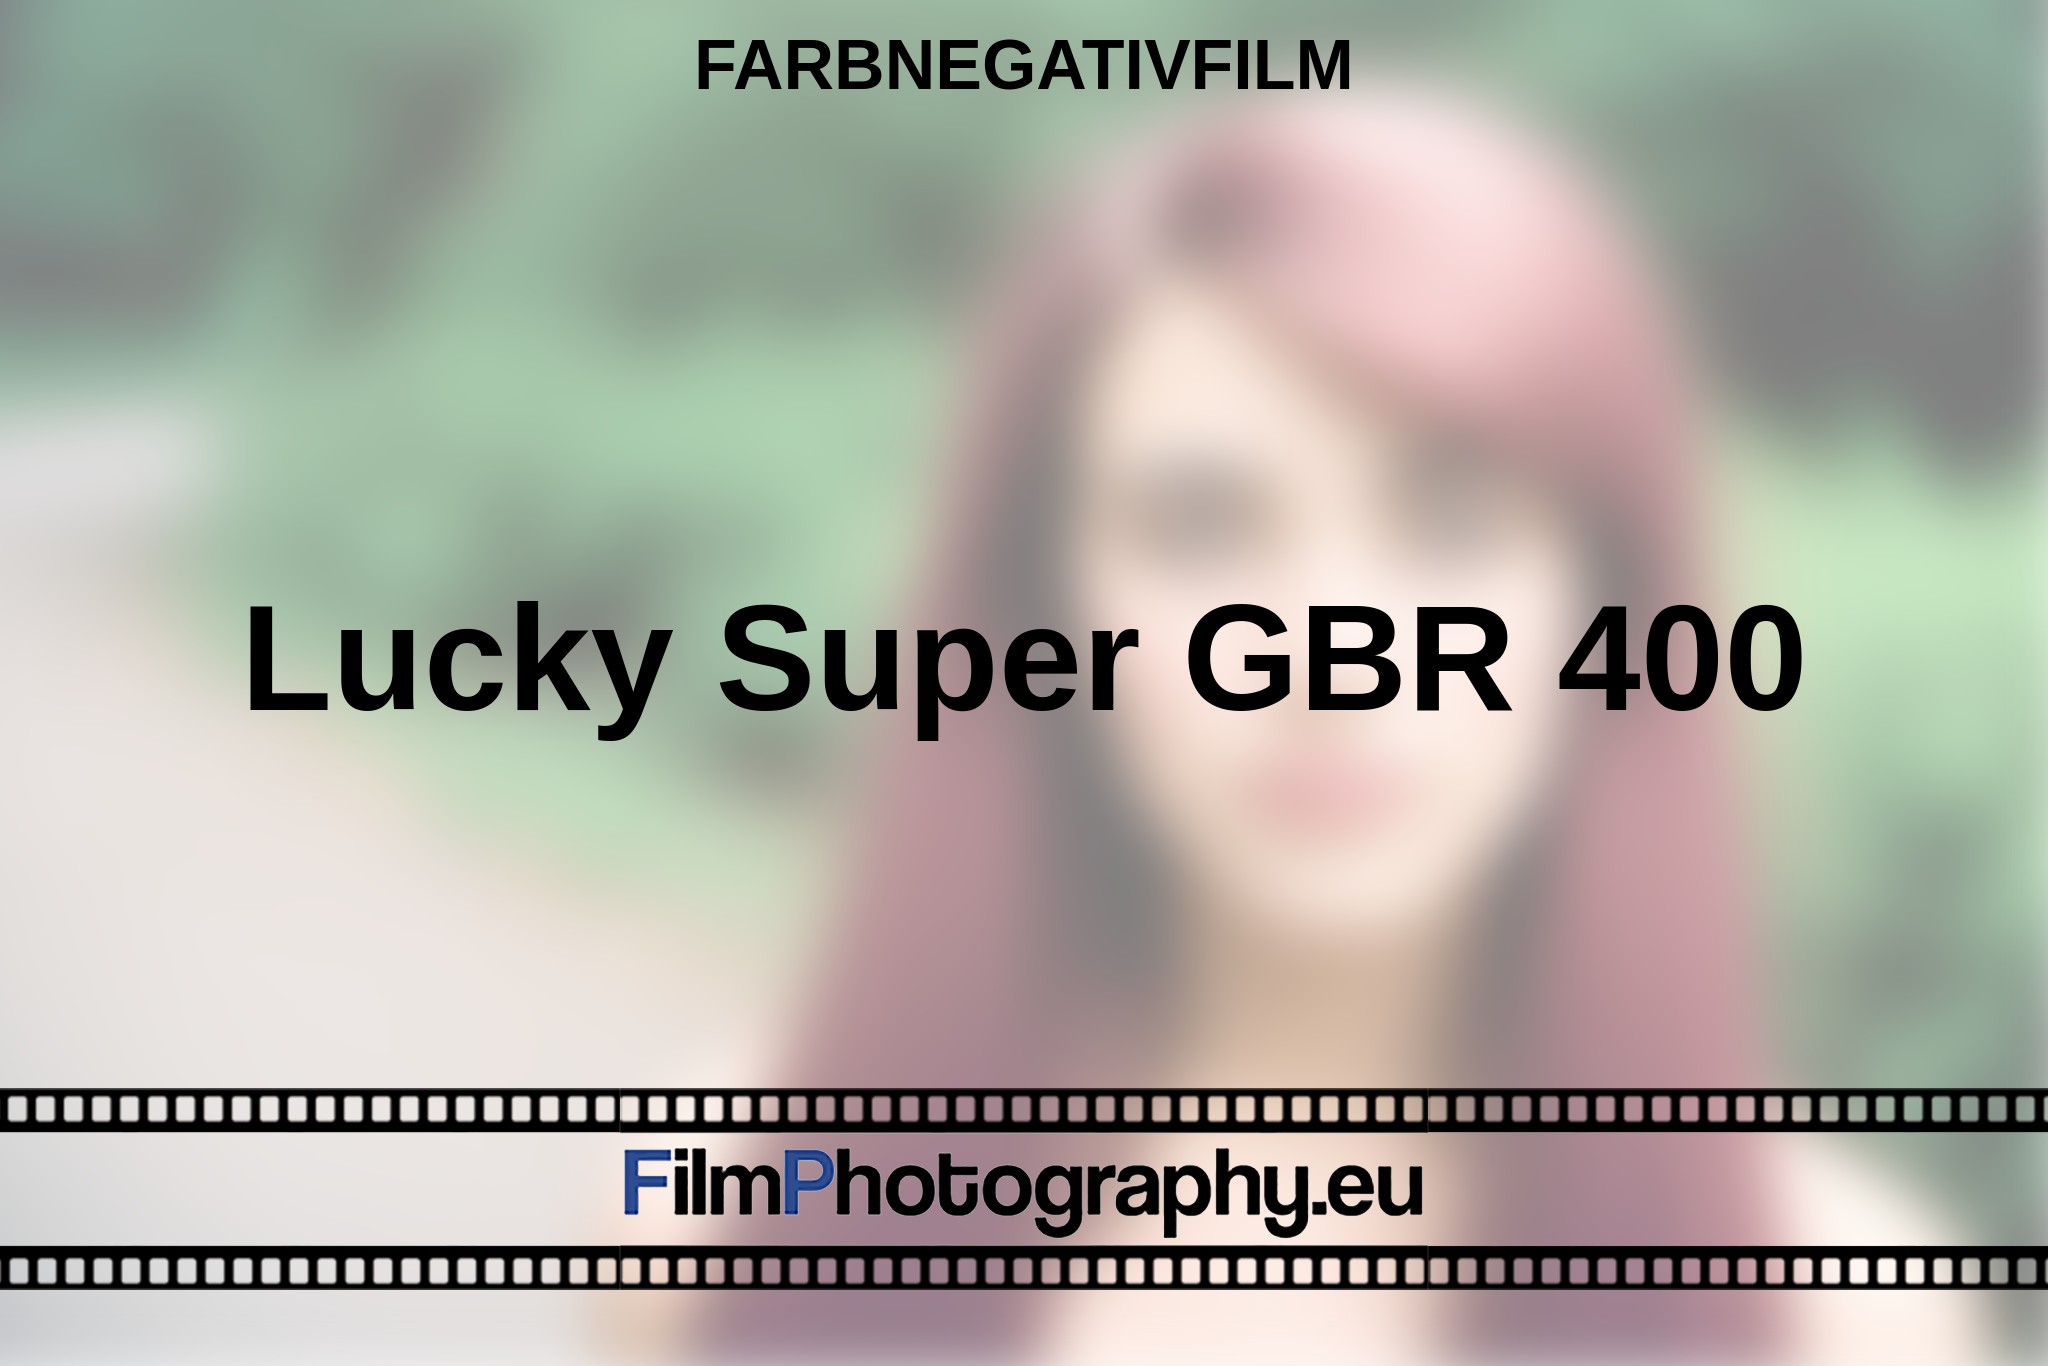 lucky-super-gbr-400-farbnegativfilm-bnv.jpg